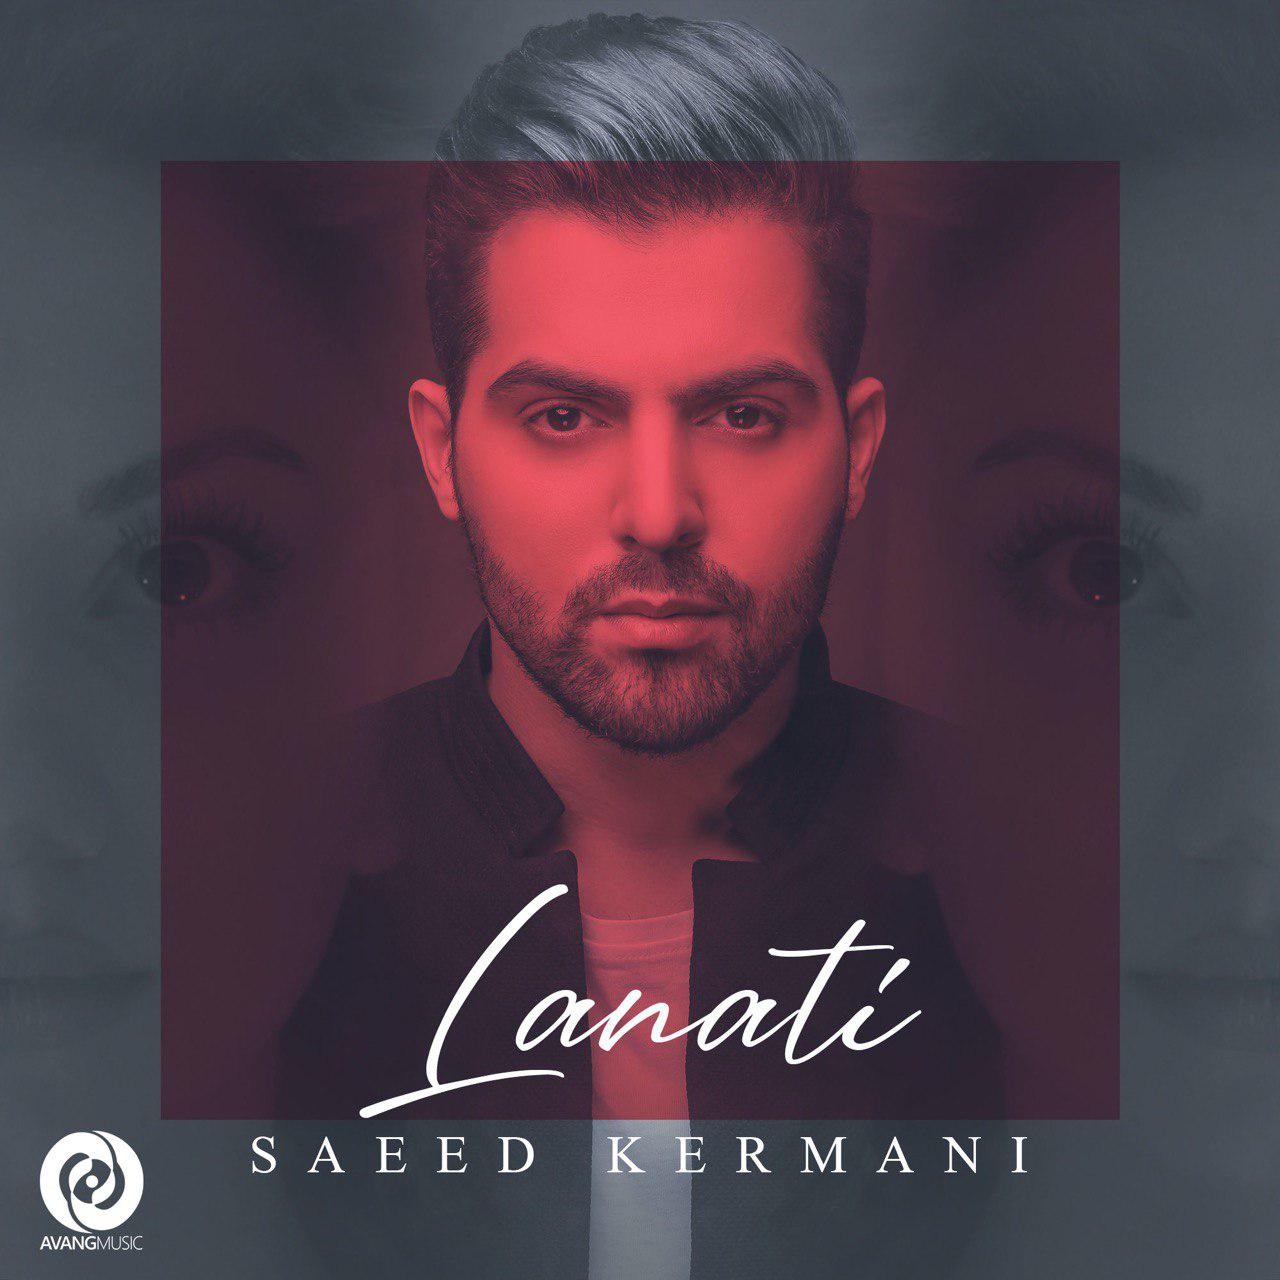  Saeed Kermani – Lanati 